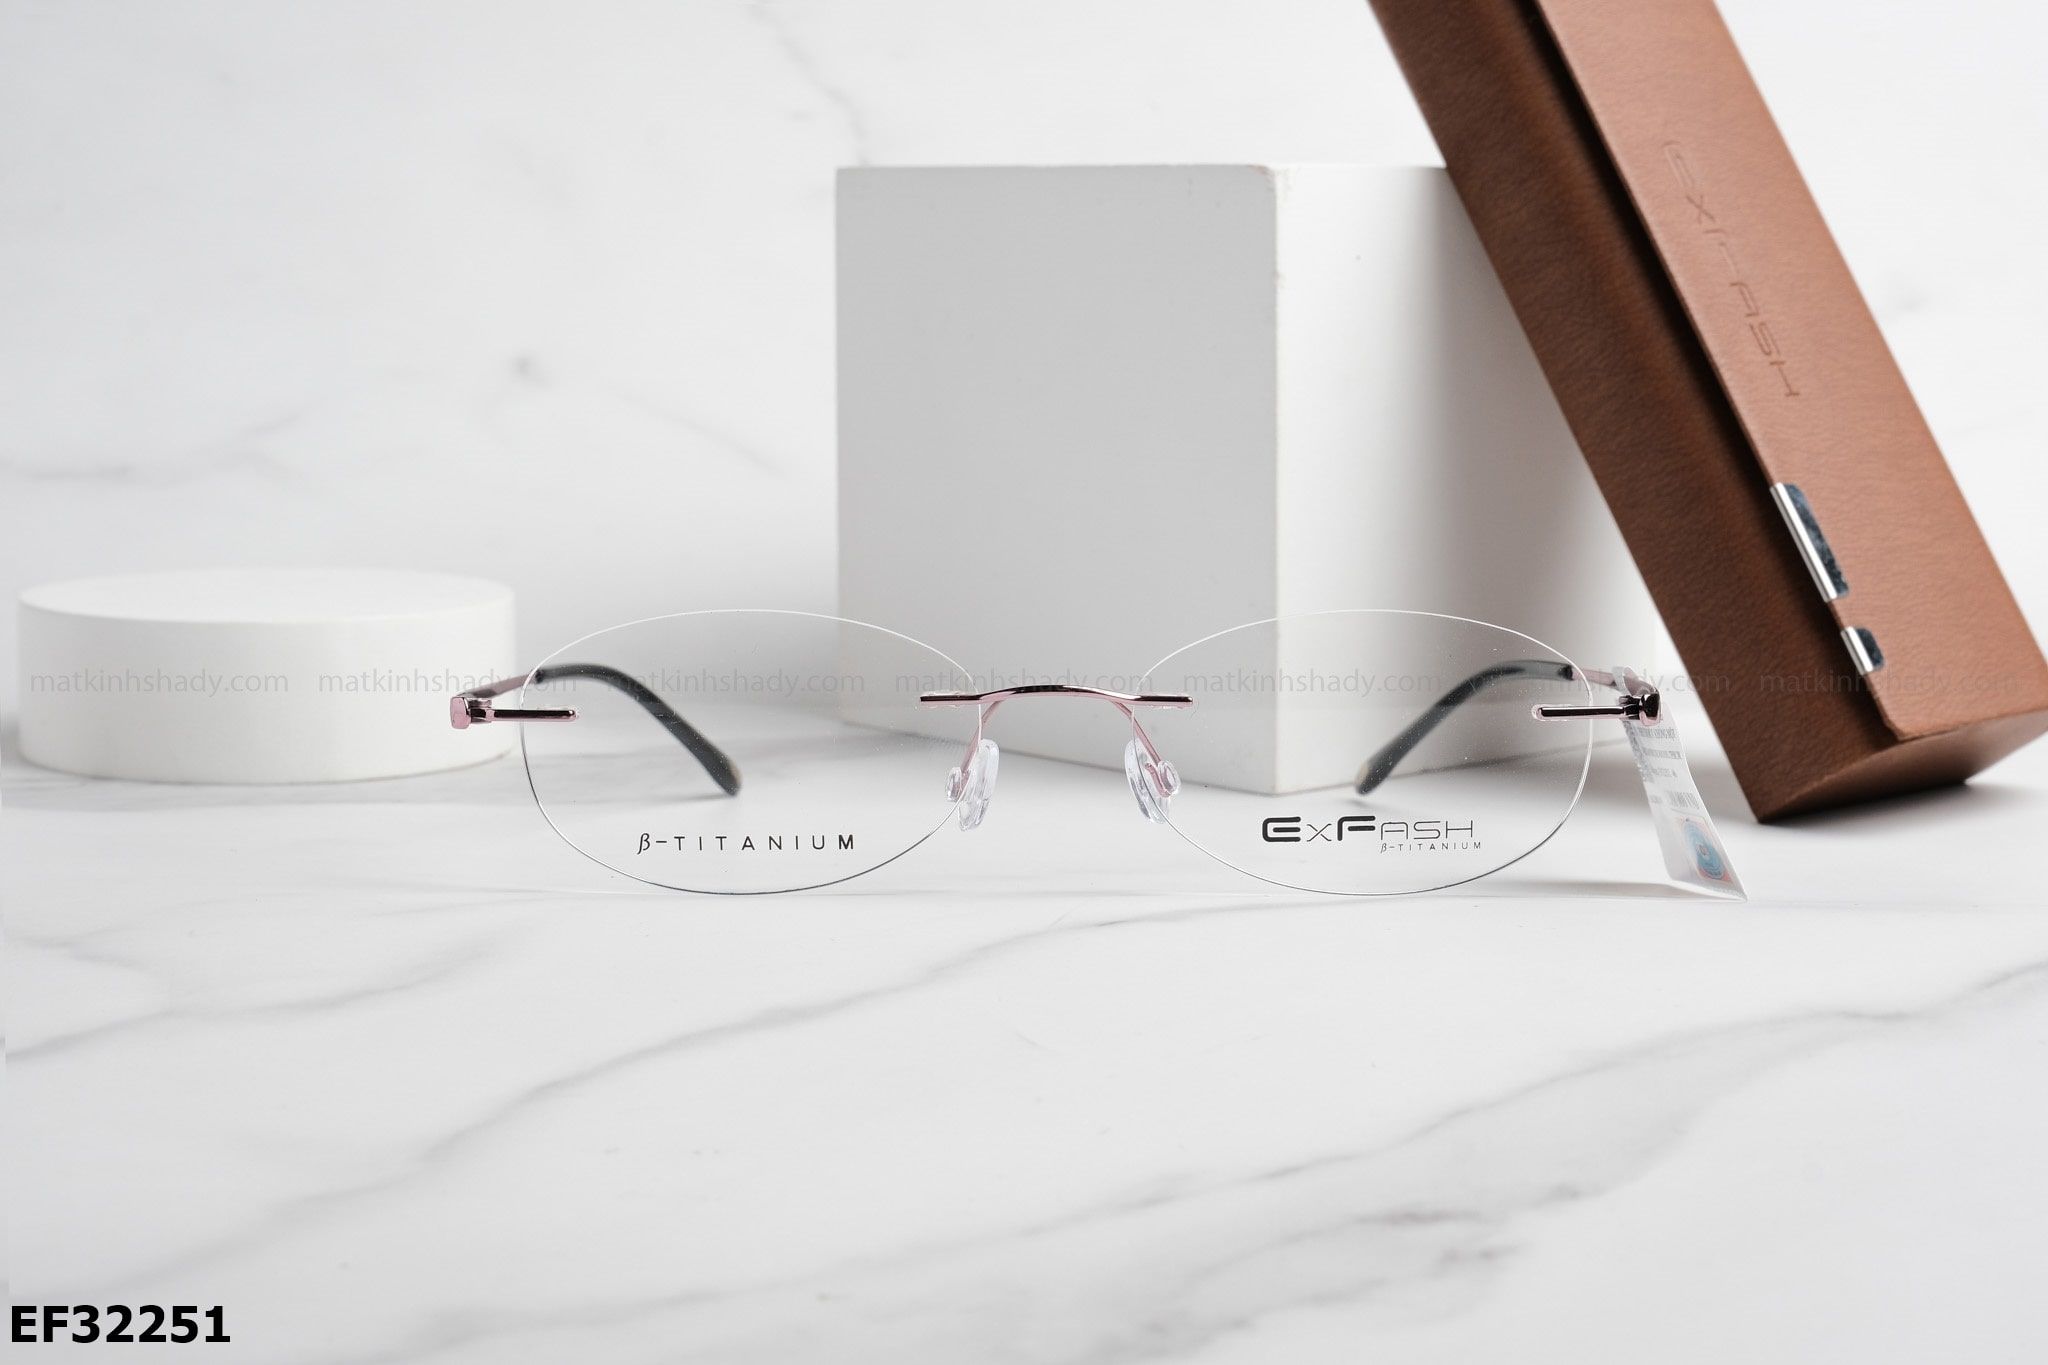  Exfash Eyewear - Glasses - EF32251 